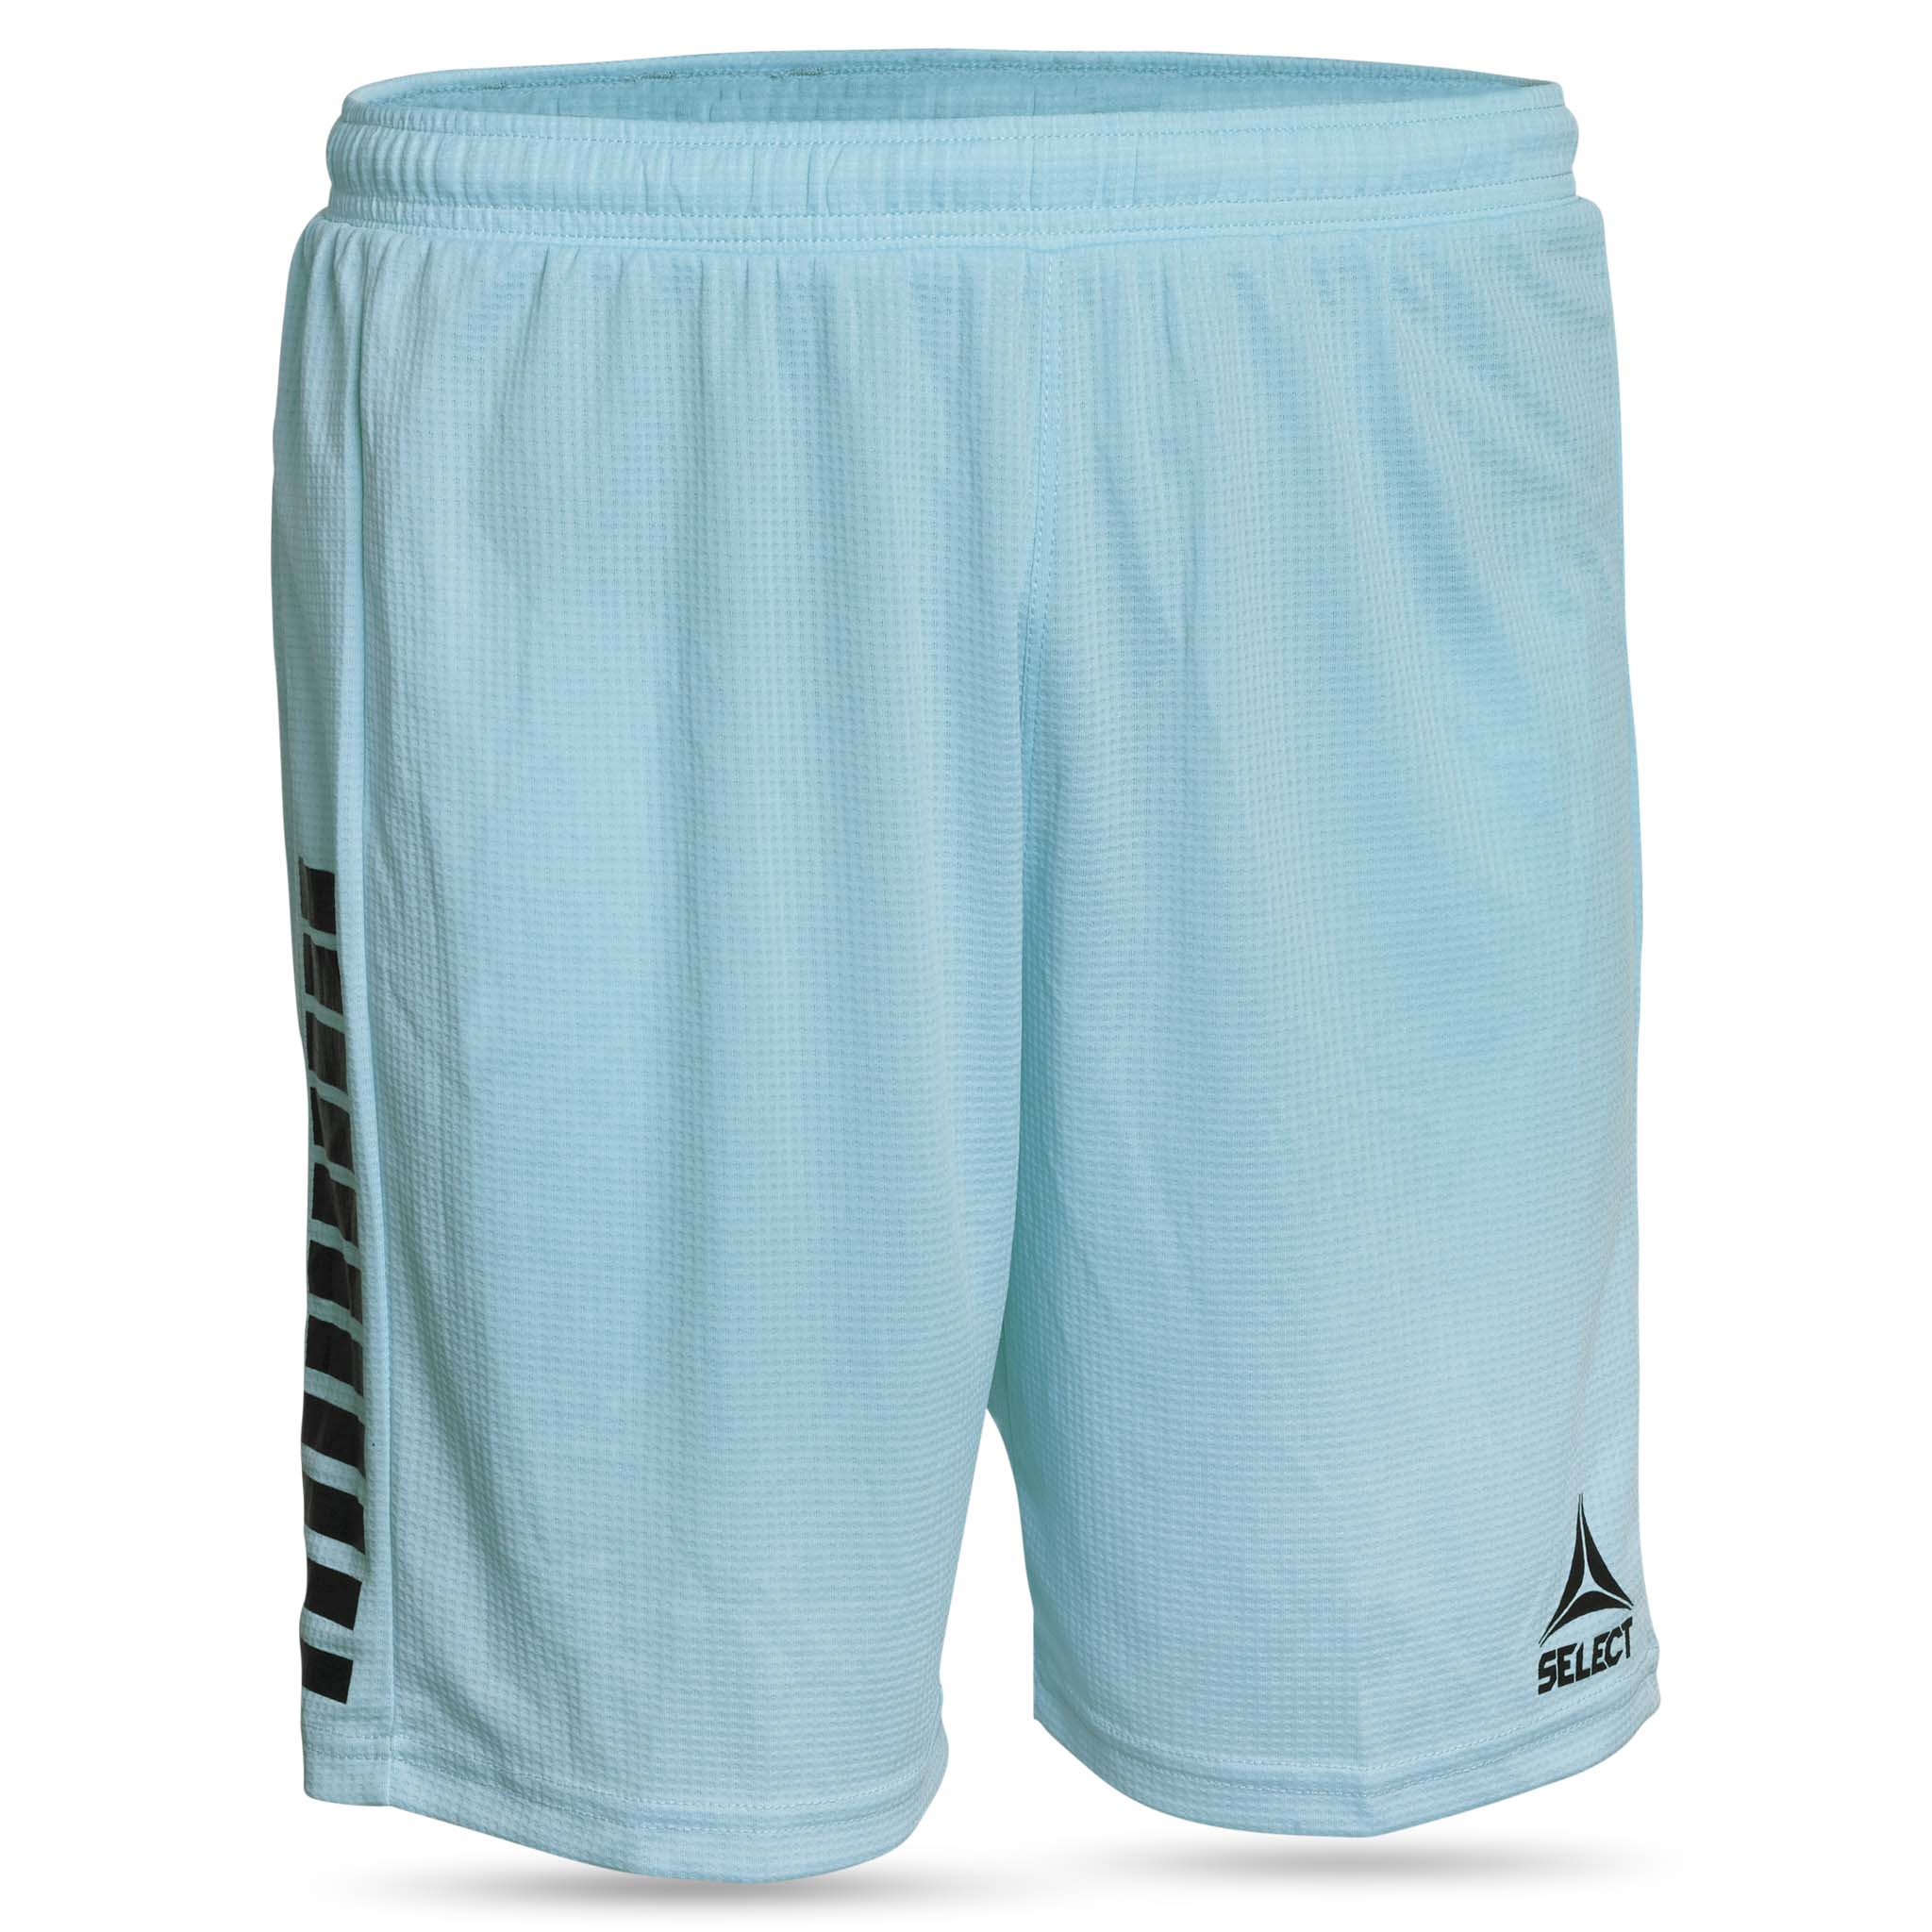 Goalkeeper shorts - Monaco, youth #colour_blue